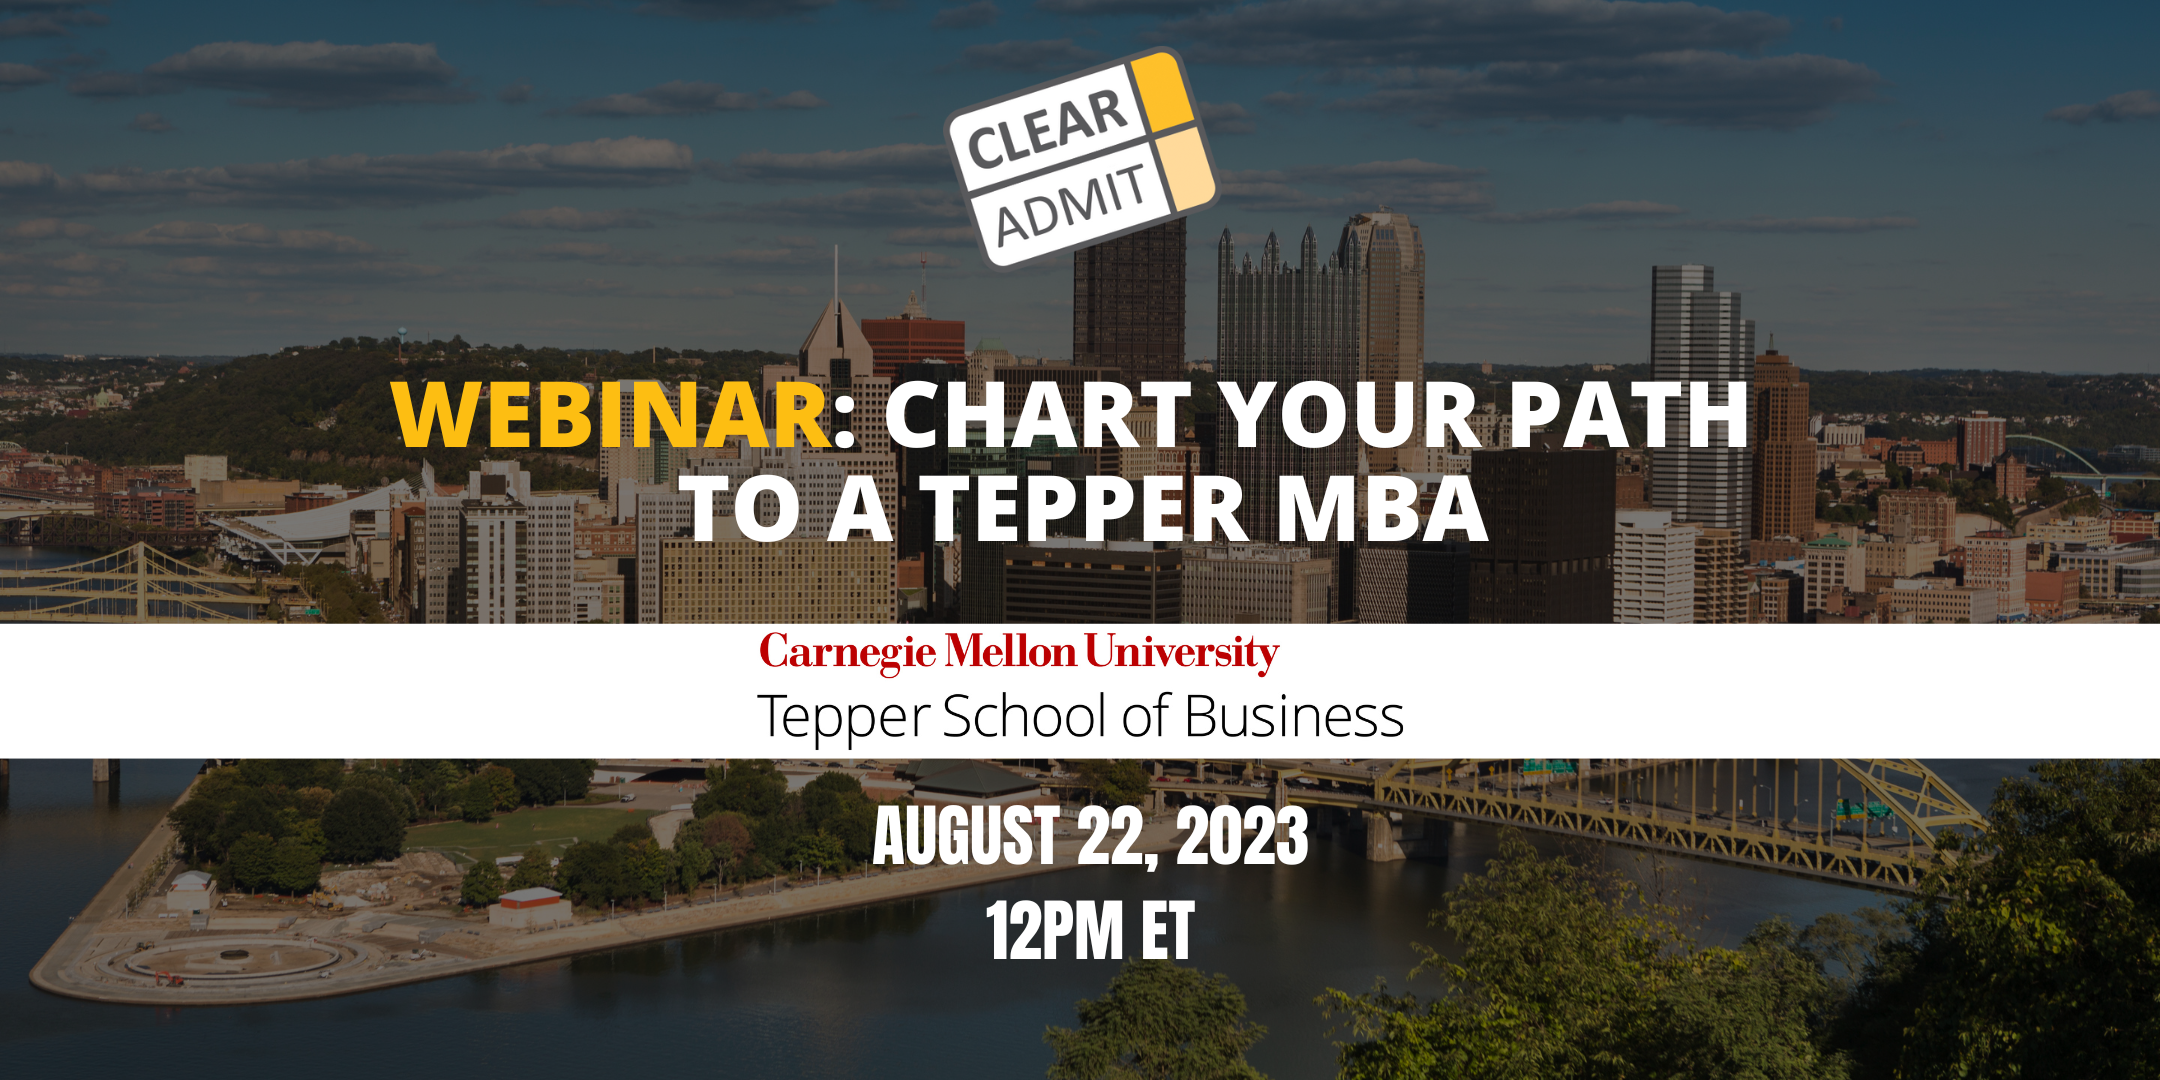 Carnegie Mellon Tepper MBA Webinar